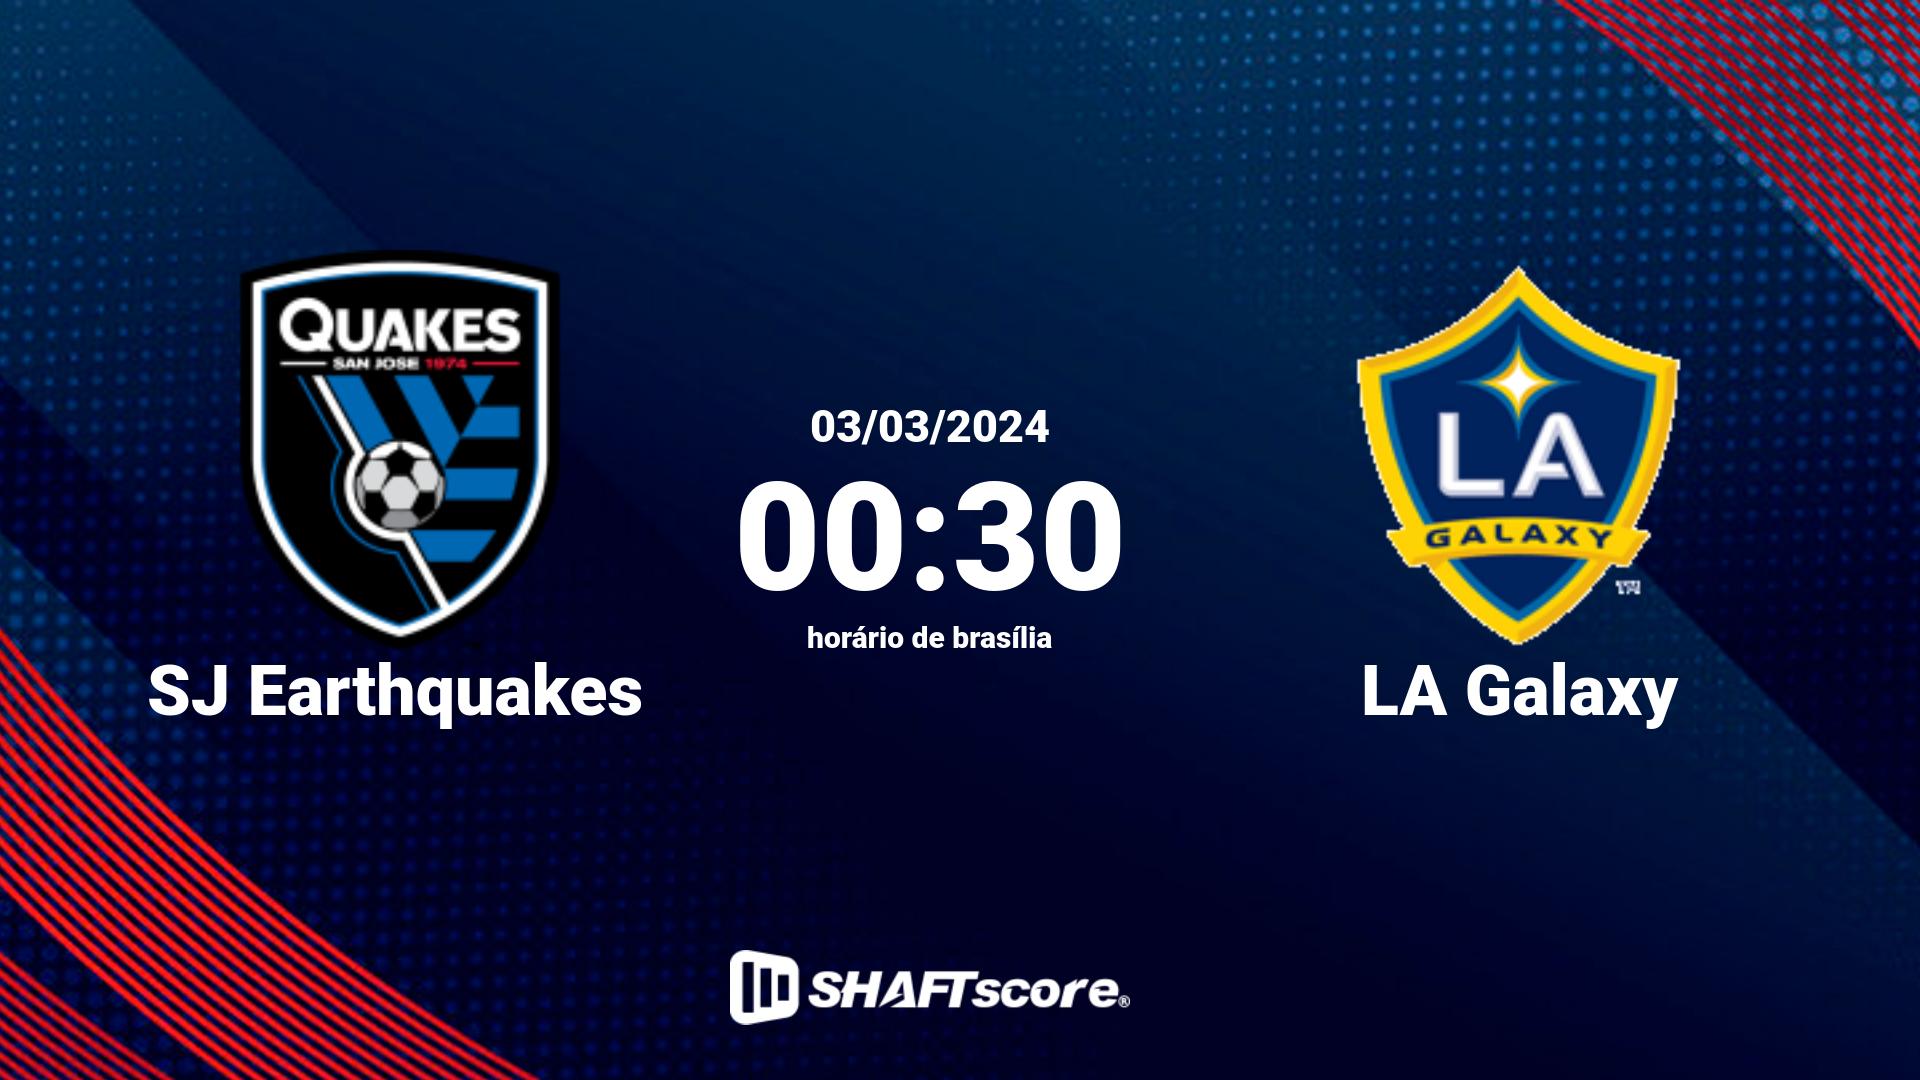 Estatísticas do jogo SJ Earthquakes vs LA Galaxy 03.03 00:30